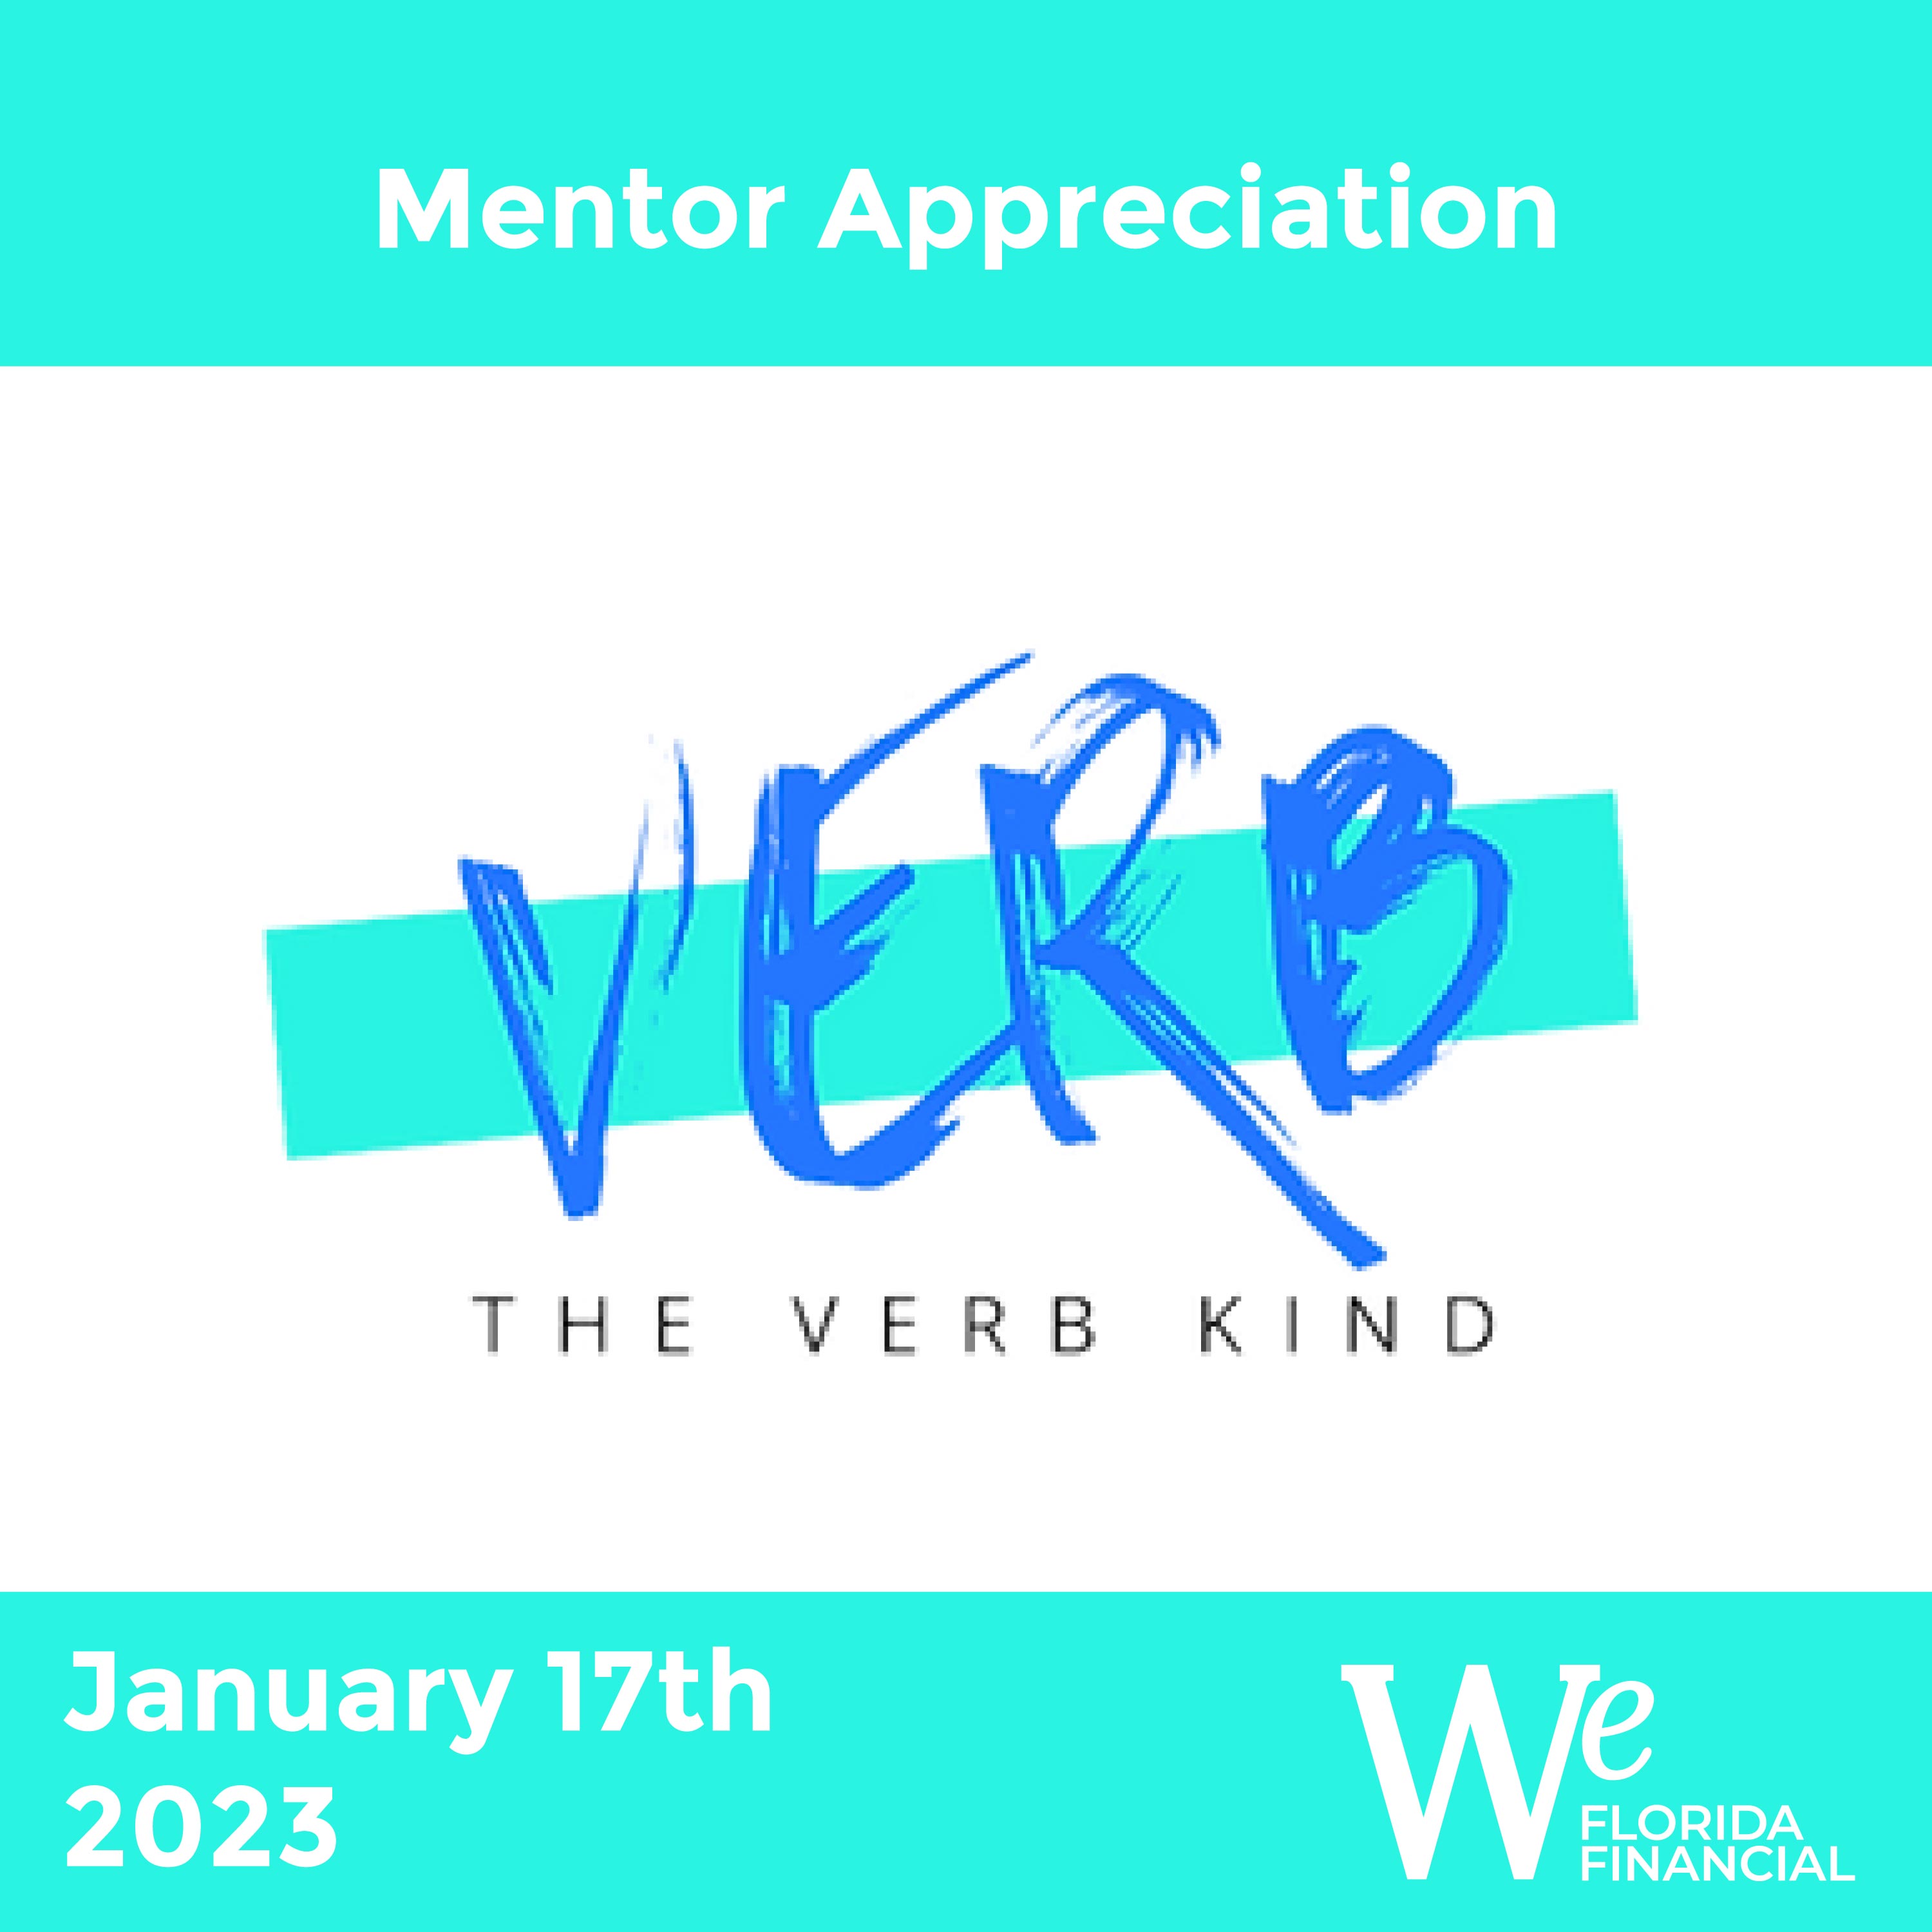 The Verb Kind mentor appreciation event